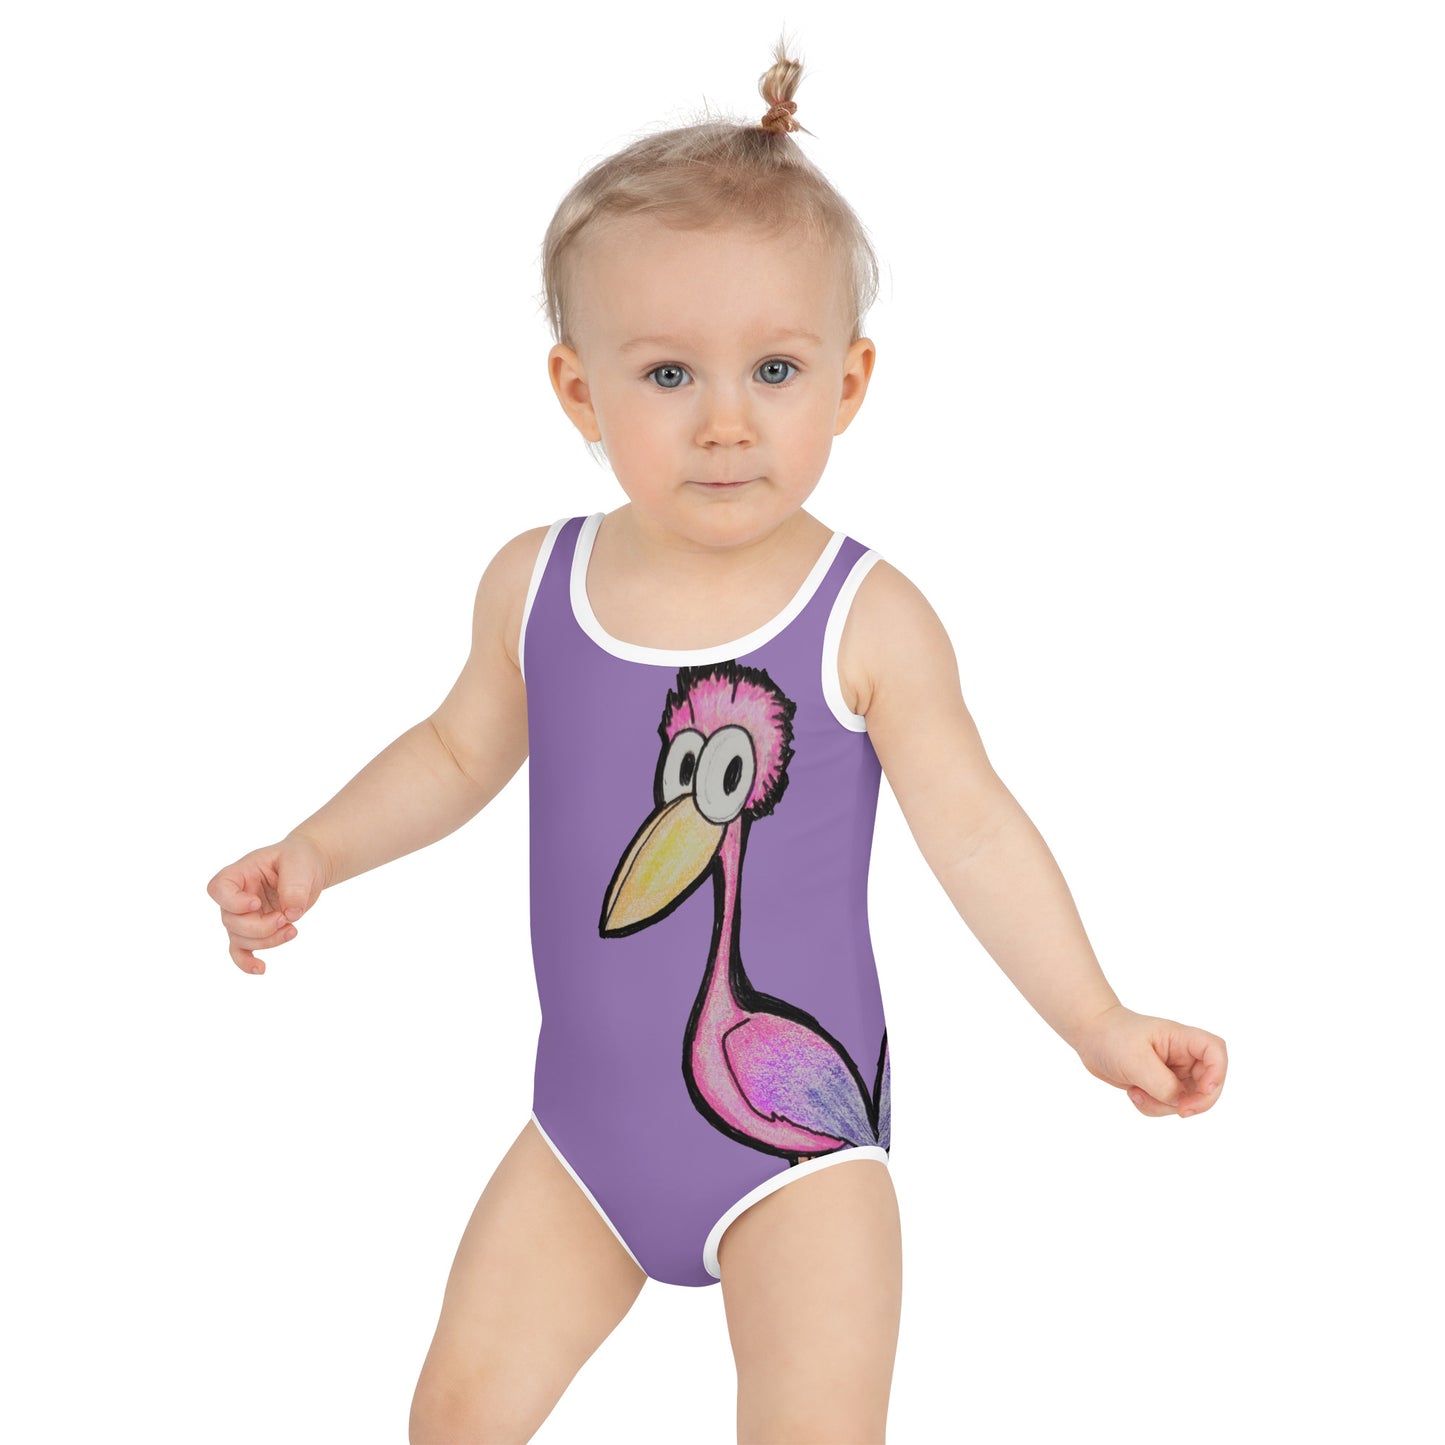 AutPop's Critters Meep All-Over Print Kids Swimsuit